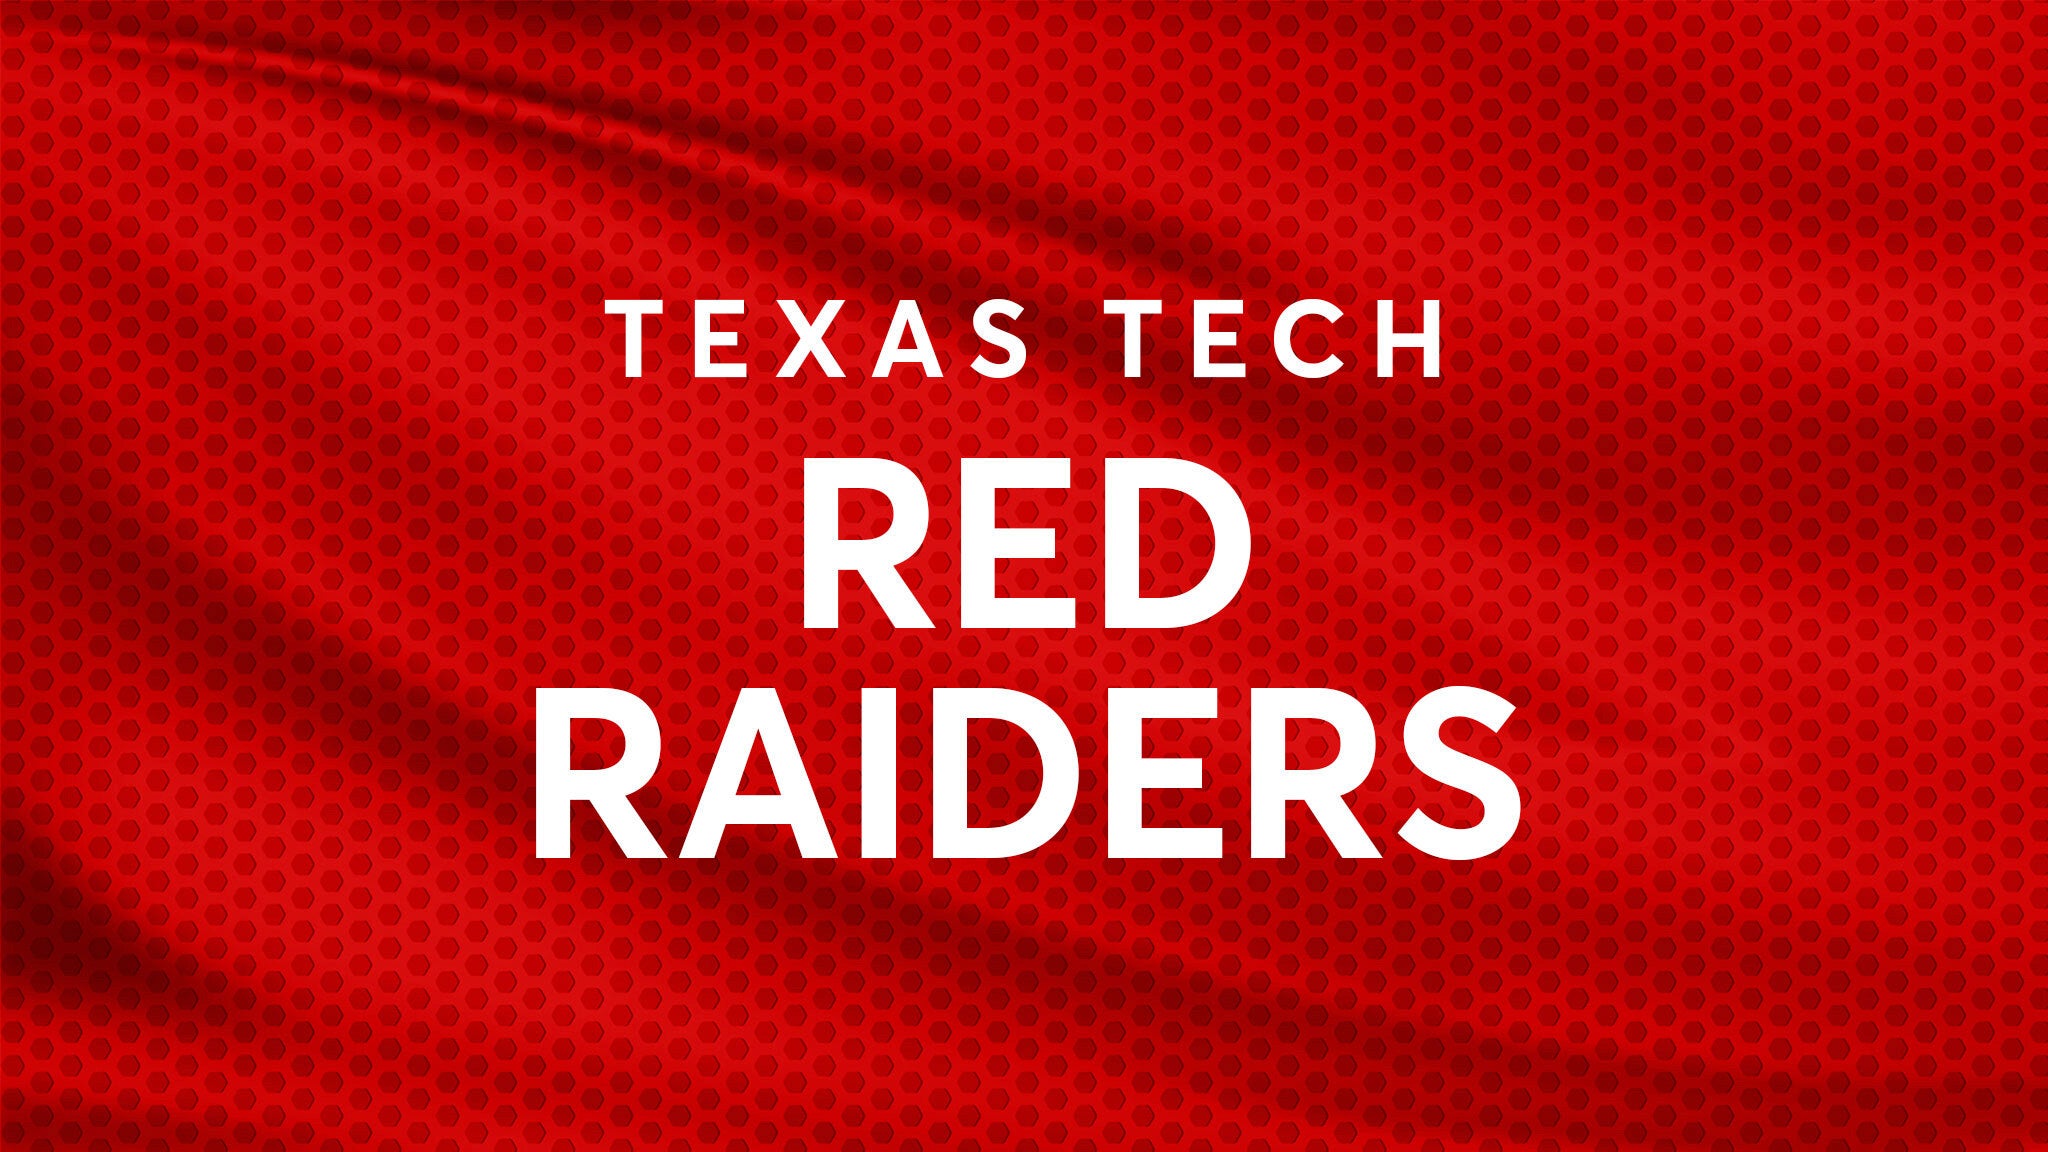 Texas Tech Red Raiders Football vs. West Virginia Mountaineers Football hero